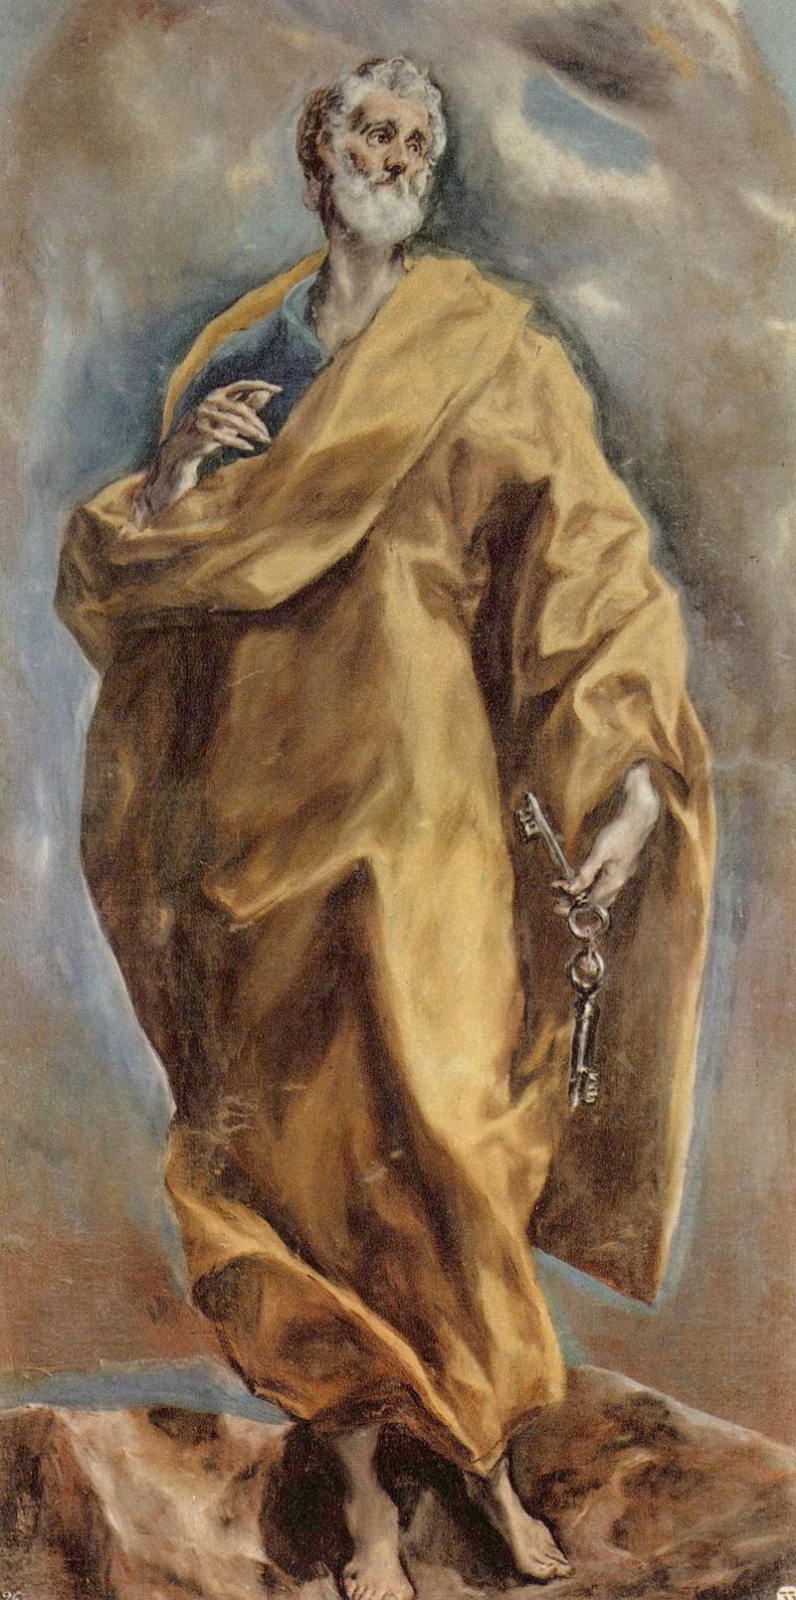 https://upload.wikimedia.org/wikipedia/commons/c/c0/Saint_Peter_by_El_Greco.jpg 